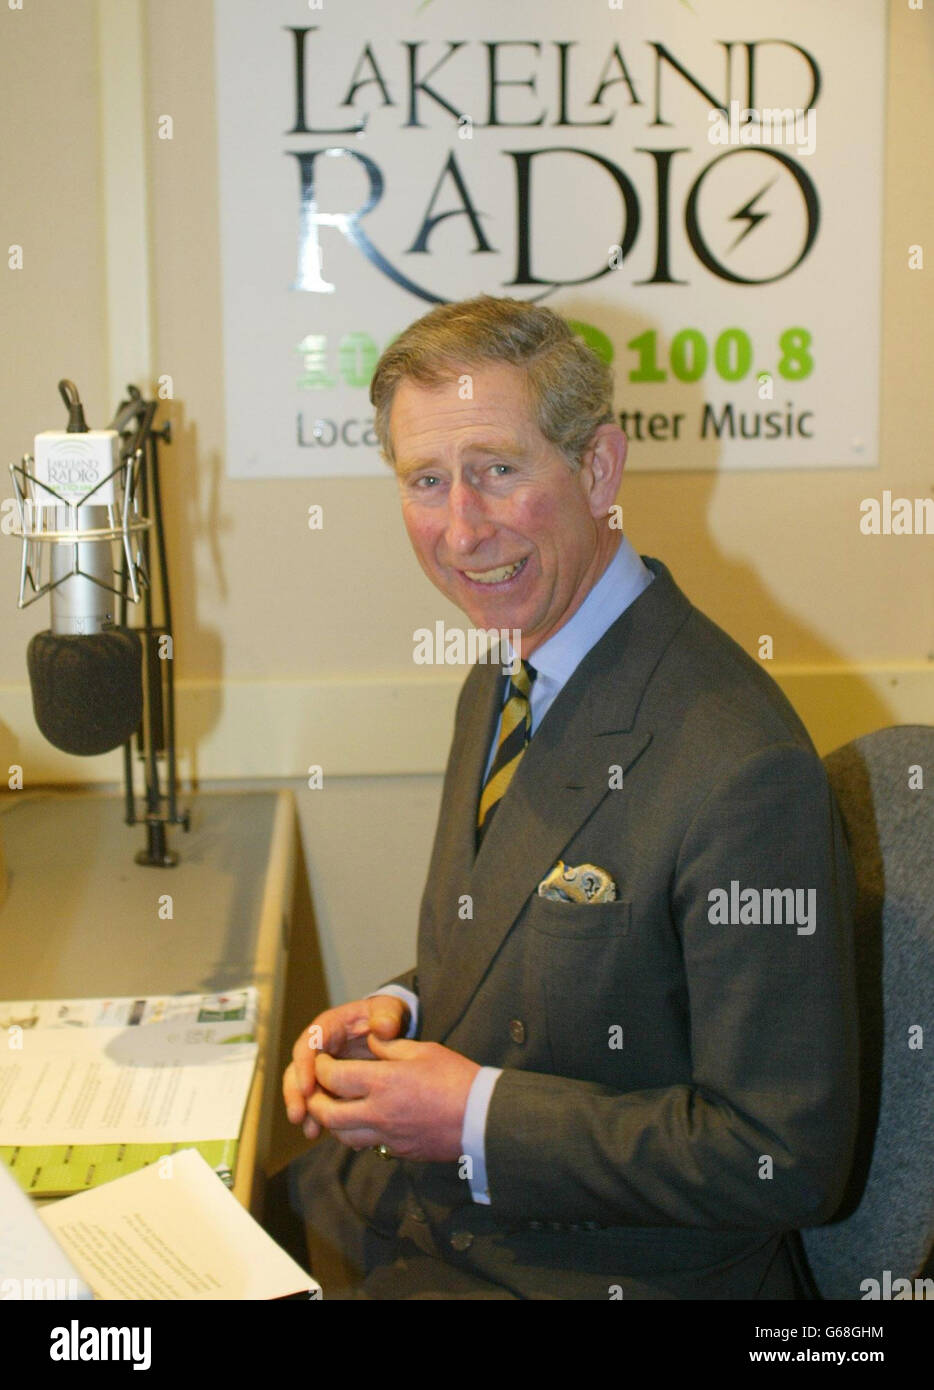 Prince Charles - Lakeland Radio Stock Photo